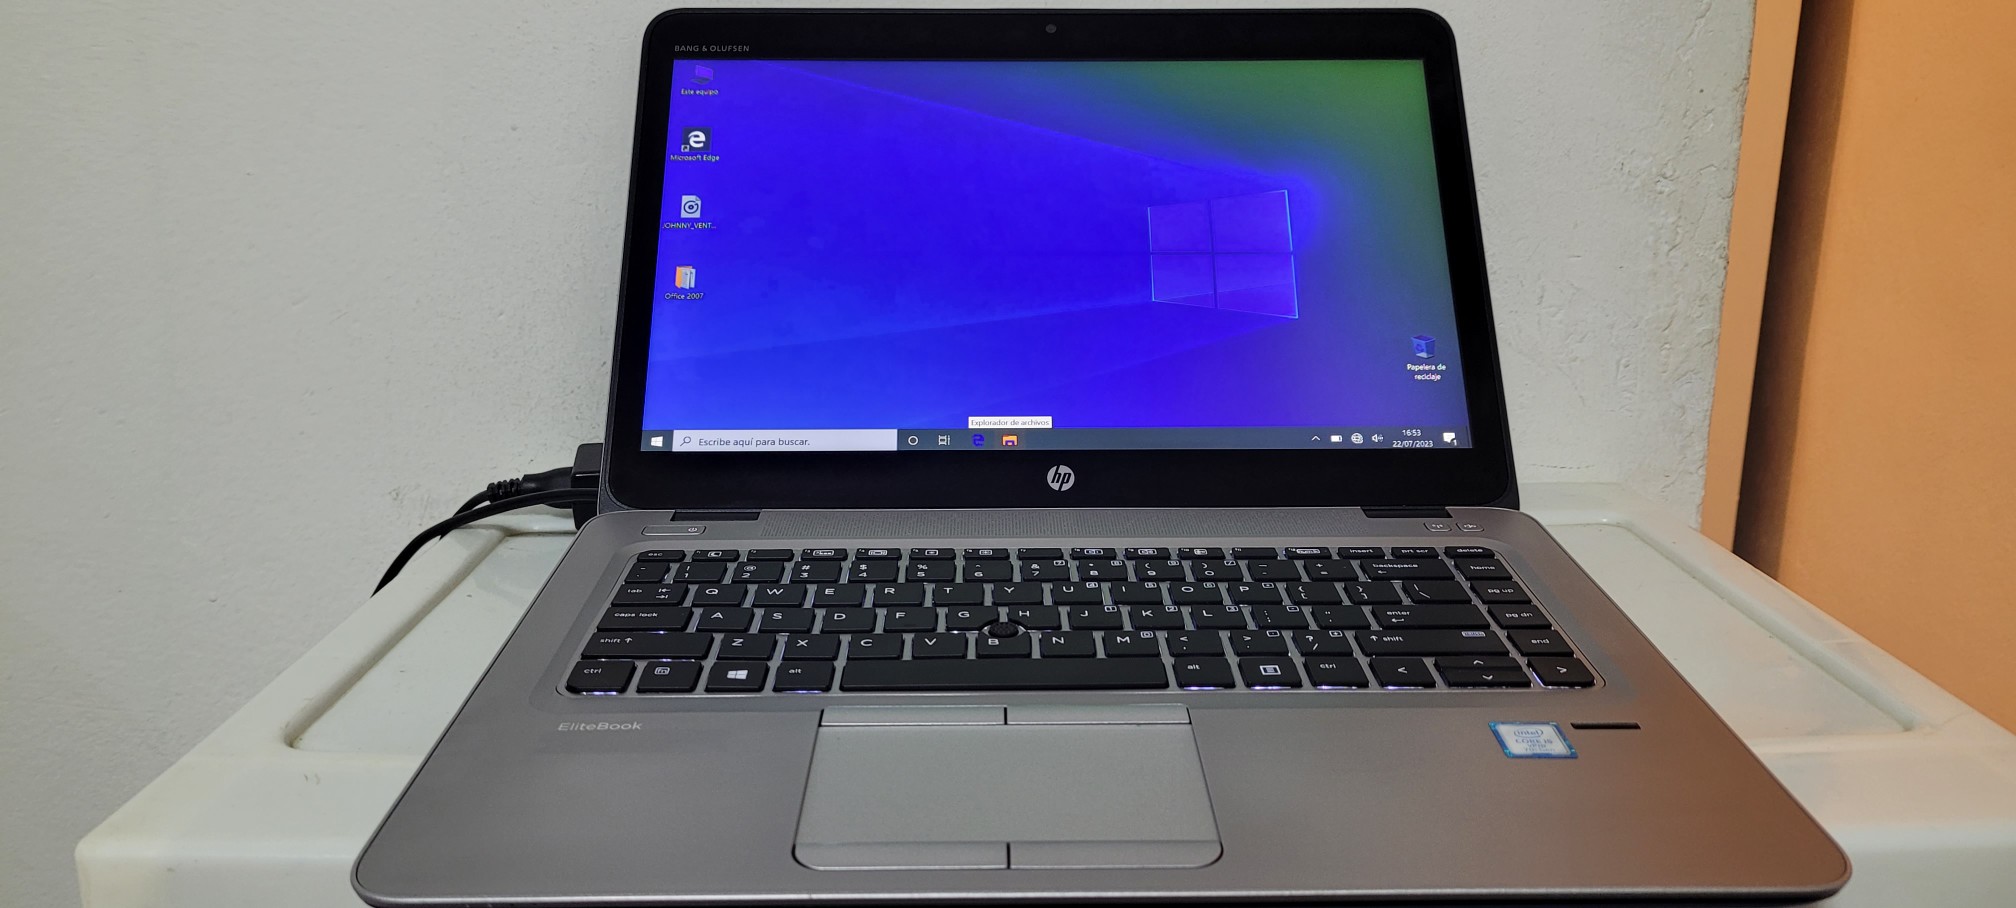 computadoras y laptops - Laptop HP Touch 14 Pulg Core i5 7ma Gen Ram 8gb ddr4 Trae dos Disco duro New